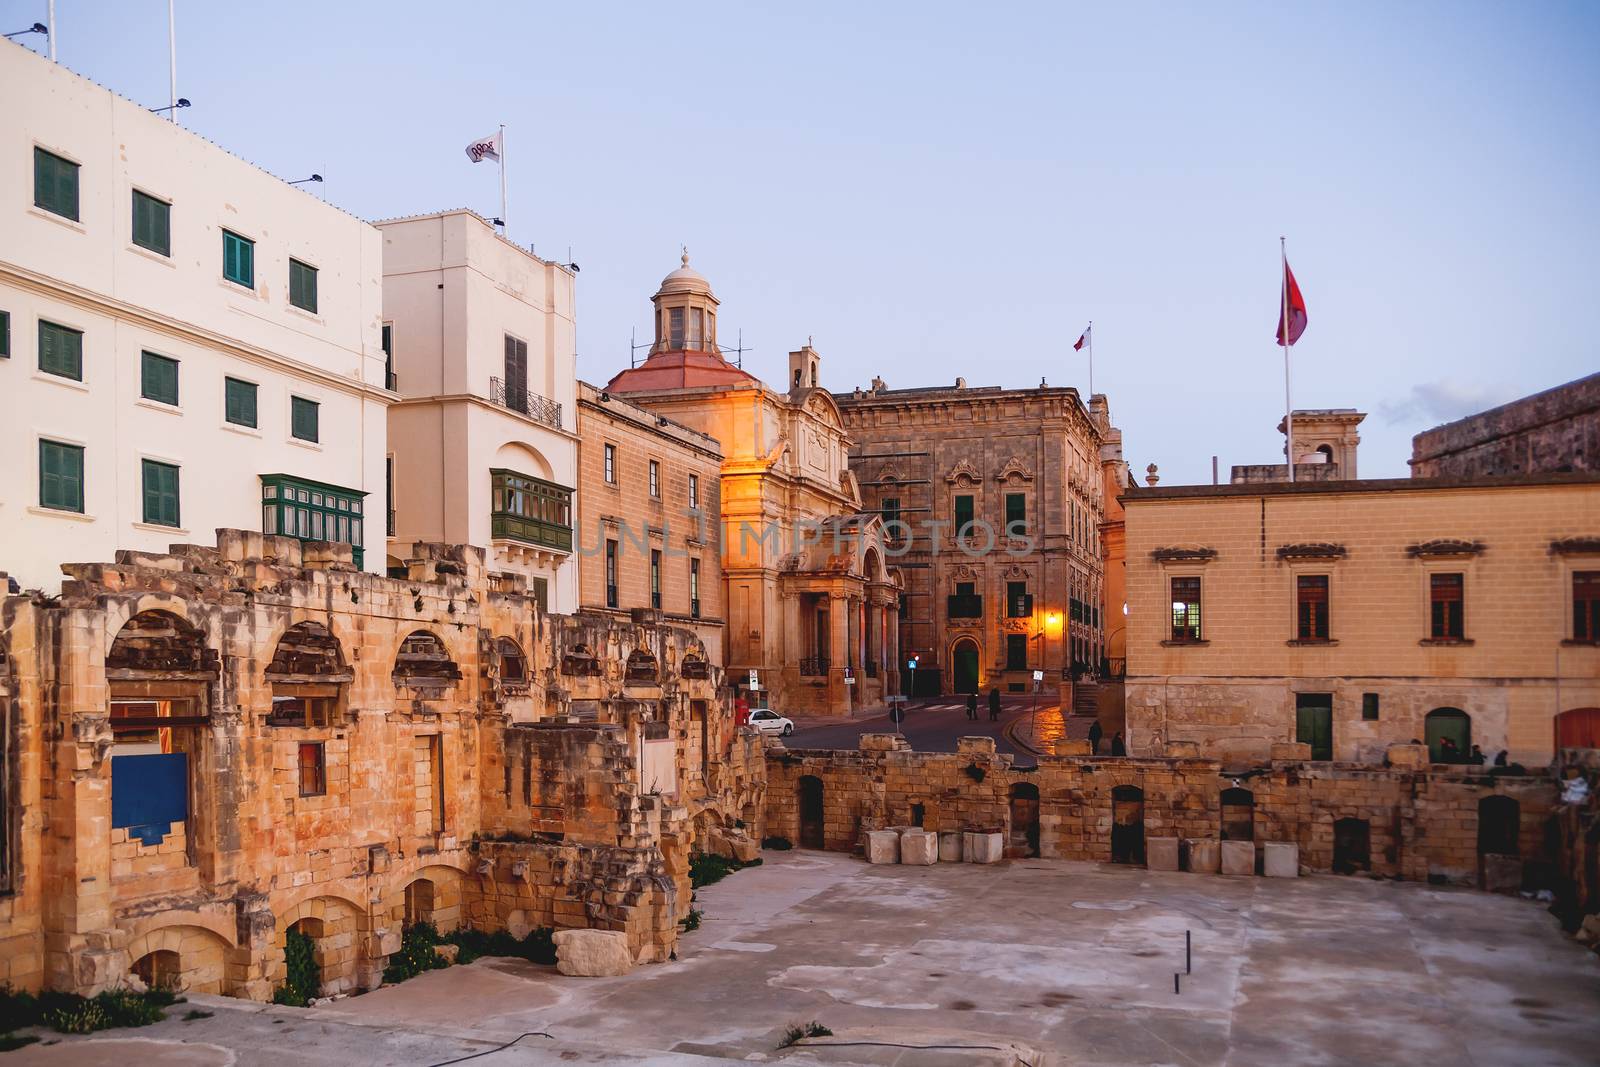 Ruins of Royal Opera theatre. Winter evening in Valletta, Malta.